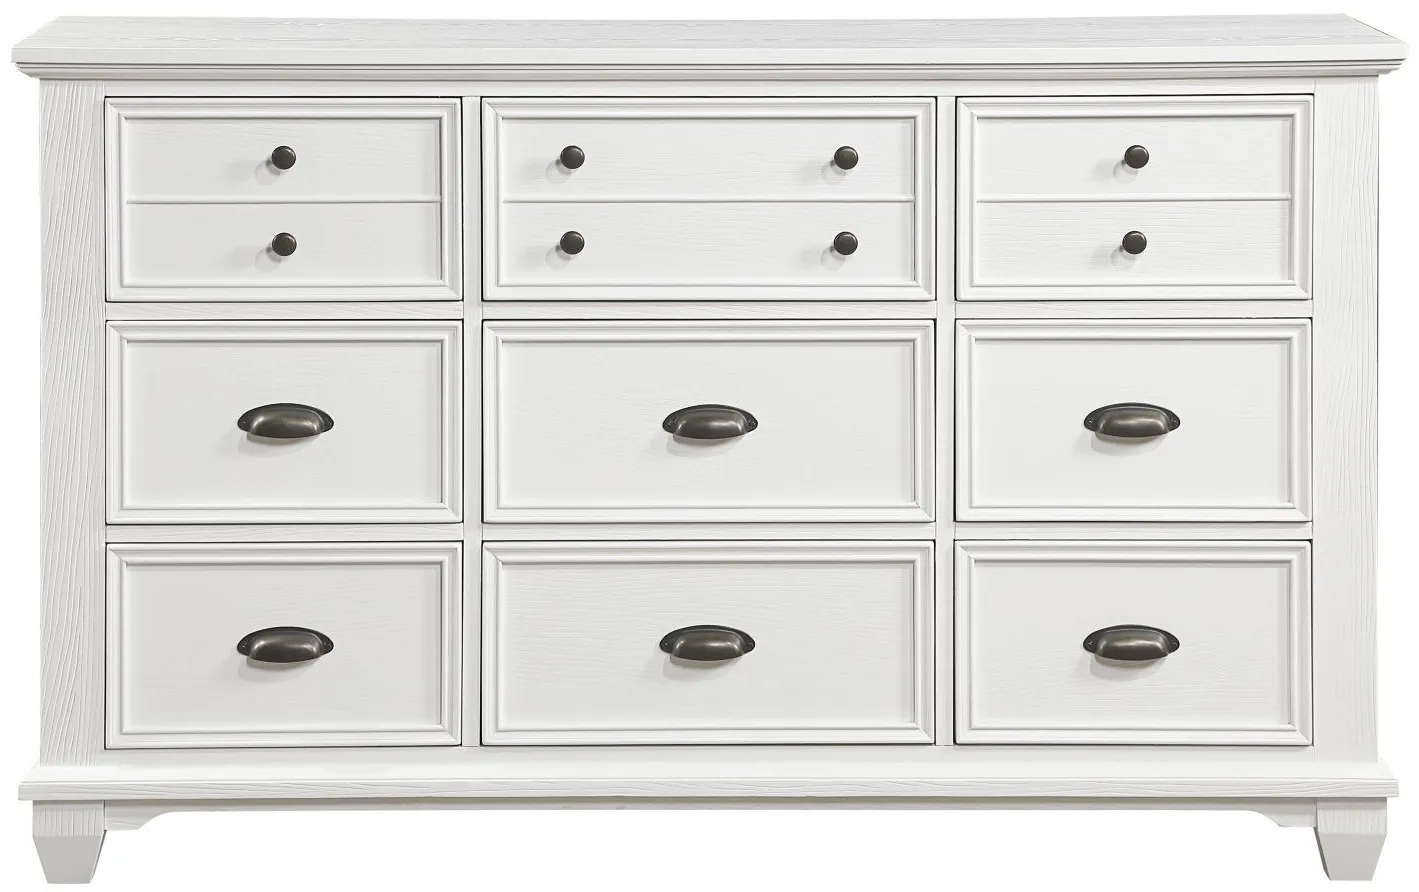 LaFollette Dresser in White by Homelegance